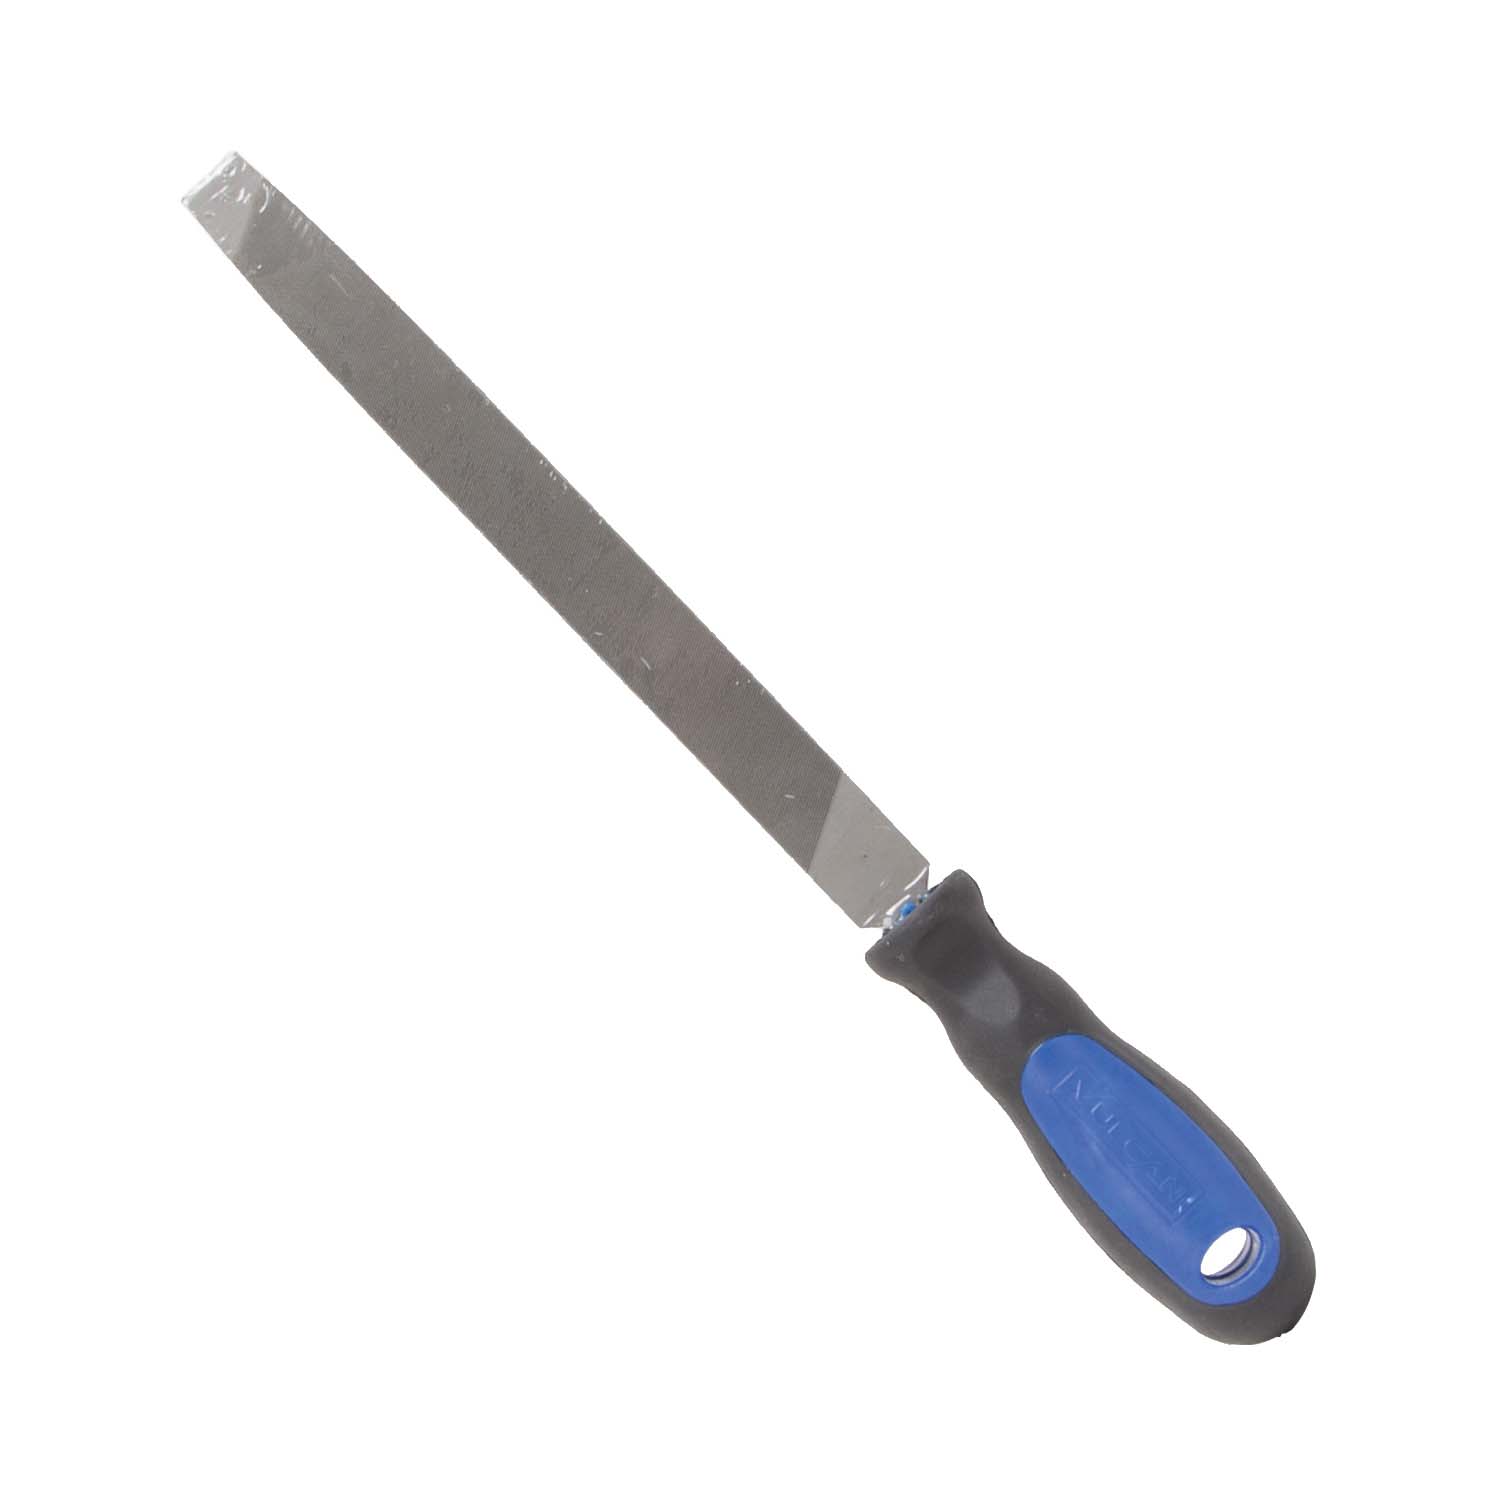 JL-F011 File, Rectangular Profile, Mill Pattern, Single Cut Cut, 3/4 in W Blade, Cushion-Grip Handle